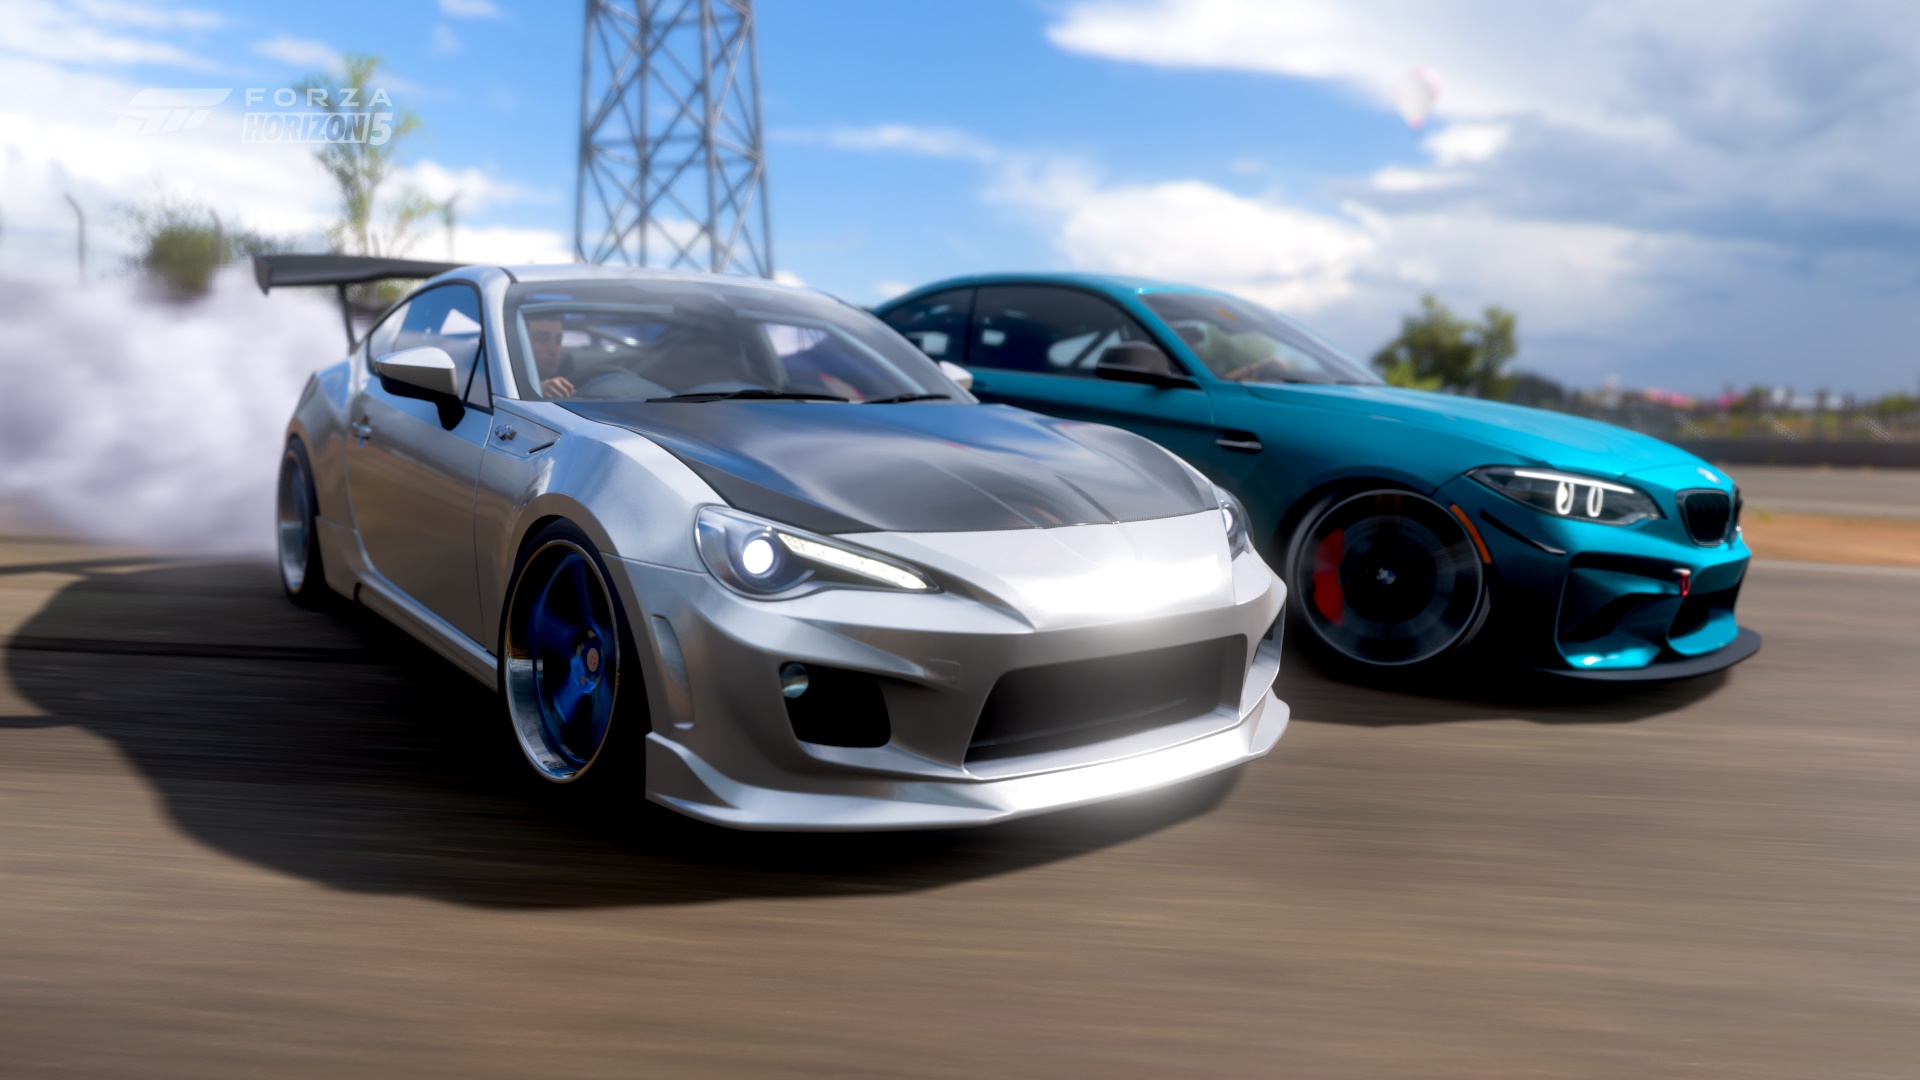 Forza Forza Horizon 5 Racing Car Drift Drift Cars Smoke Motion Blur Depth Of Field Tuning Custom Mad 1920x1080